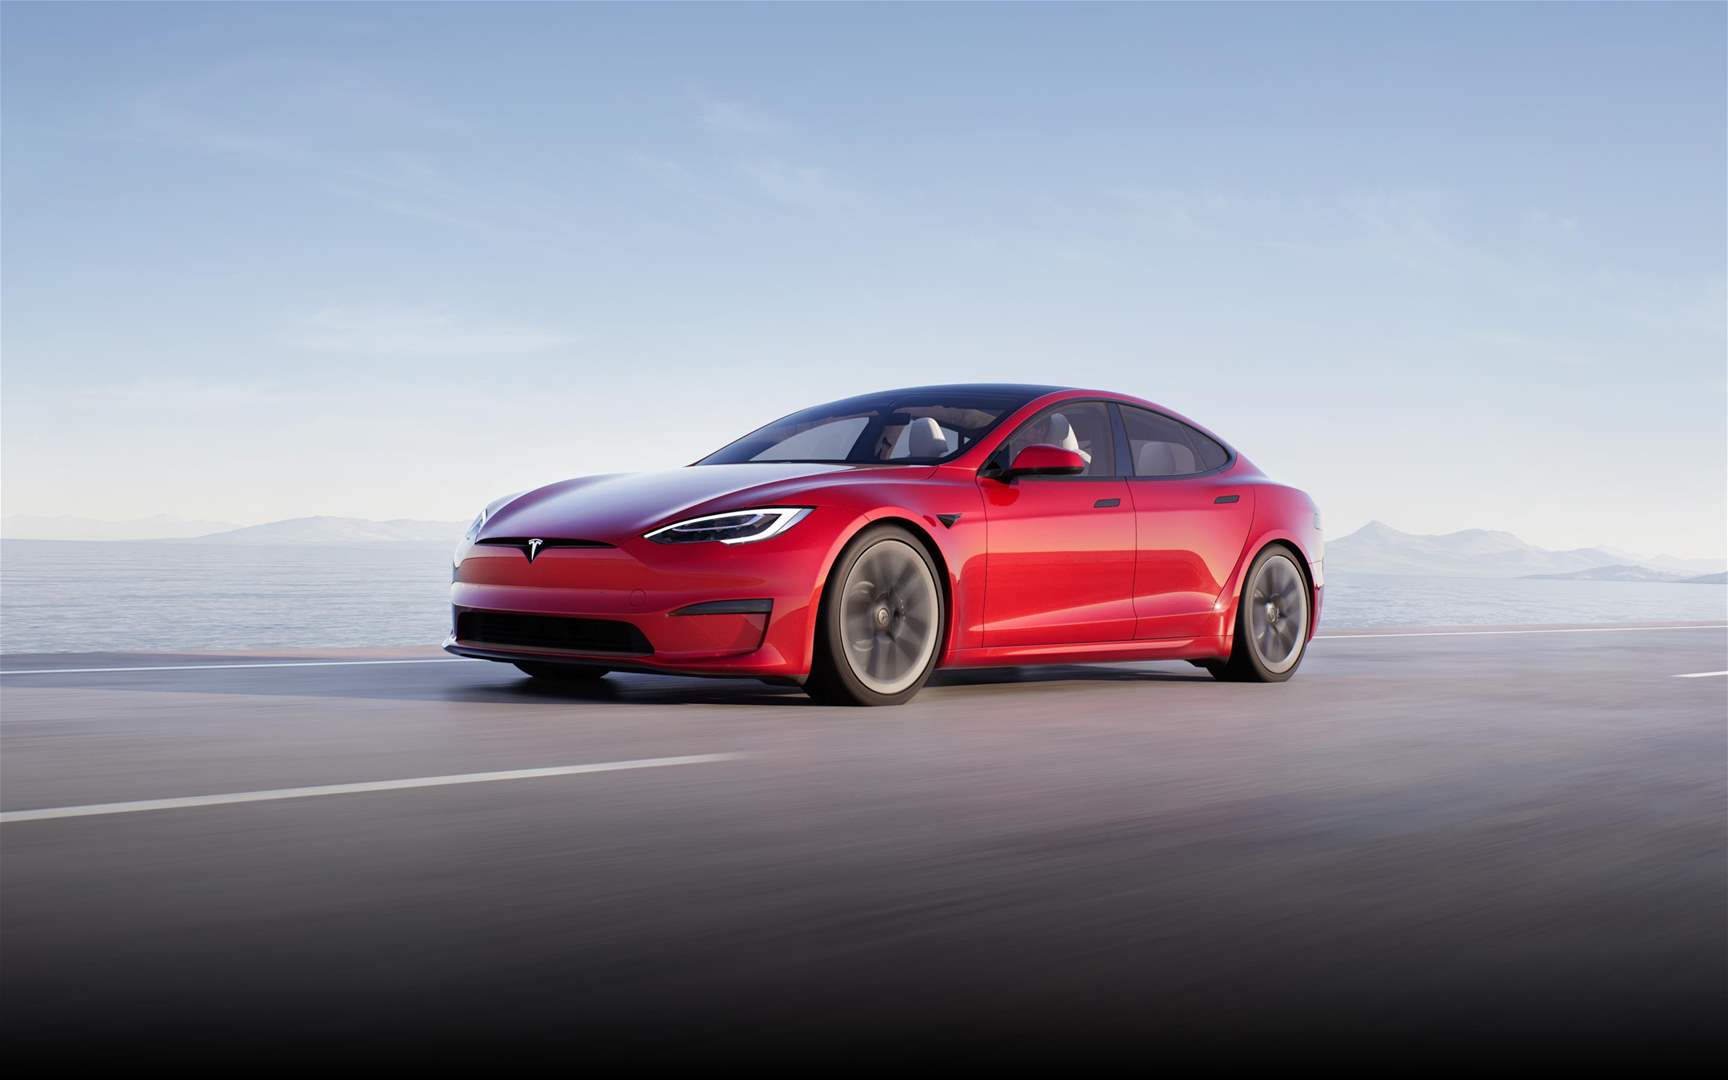 The Tesla Model S Plaid has set an EV record at the Nürburgring